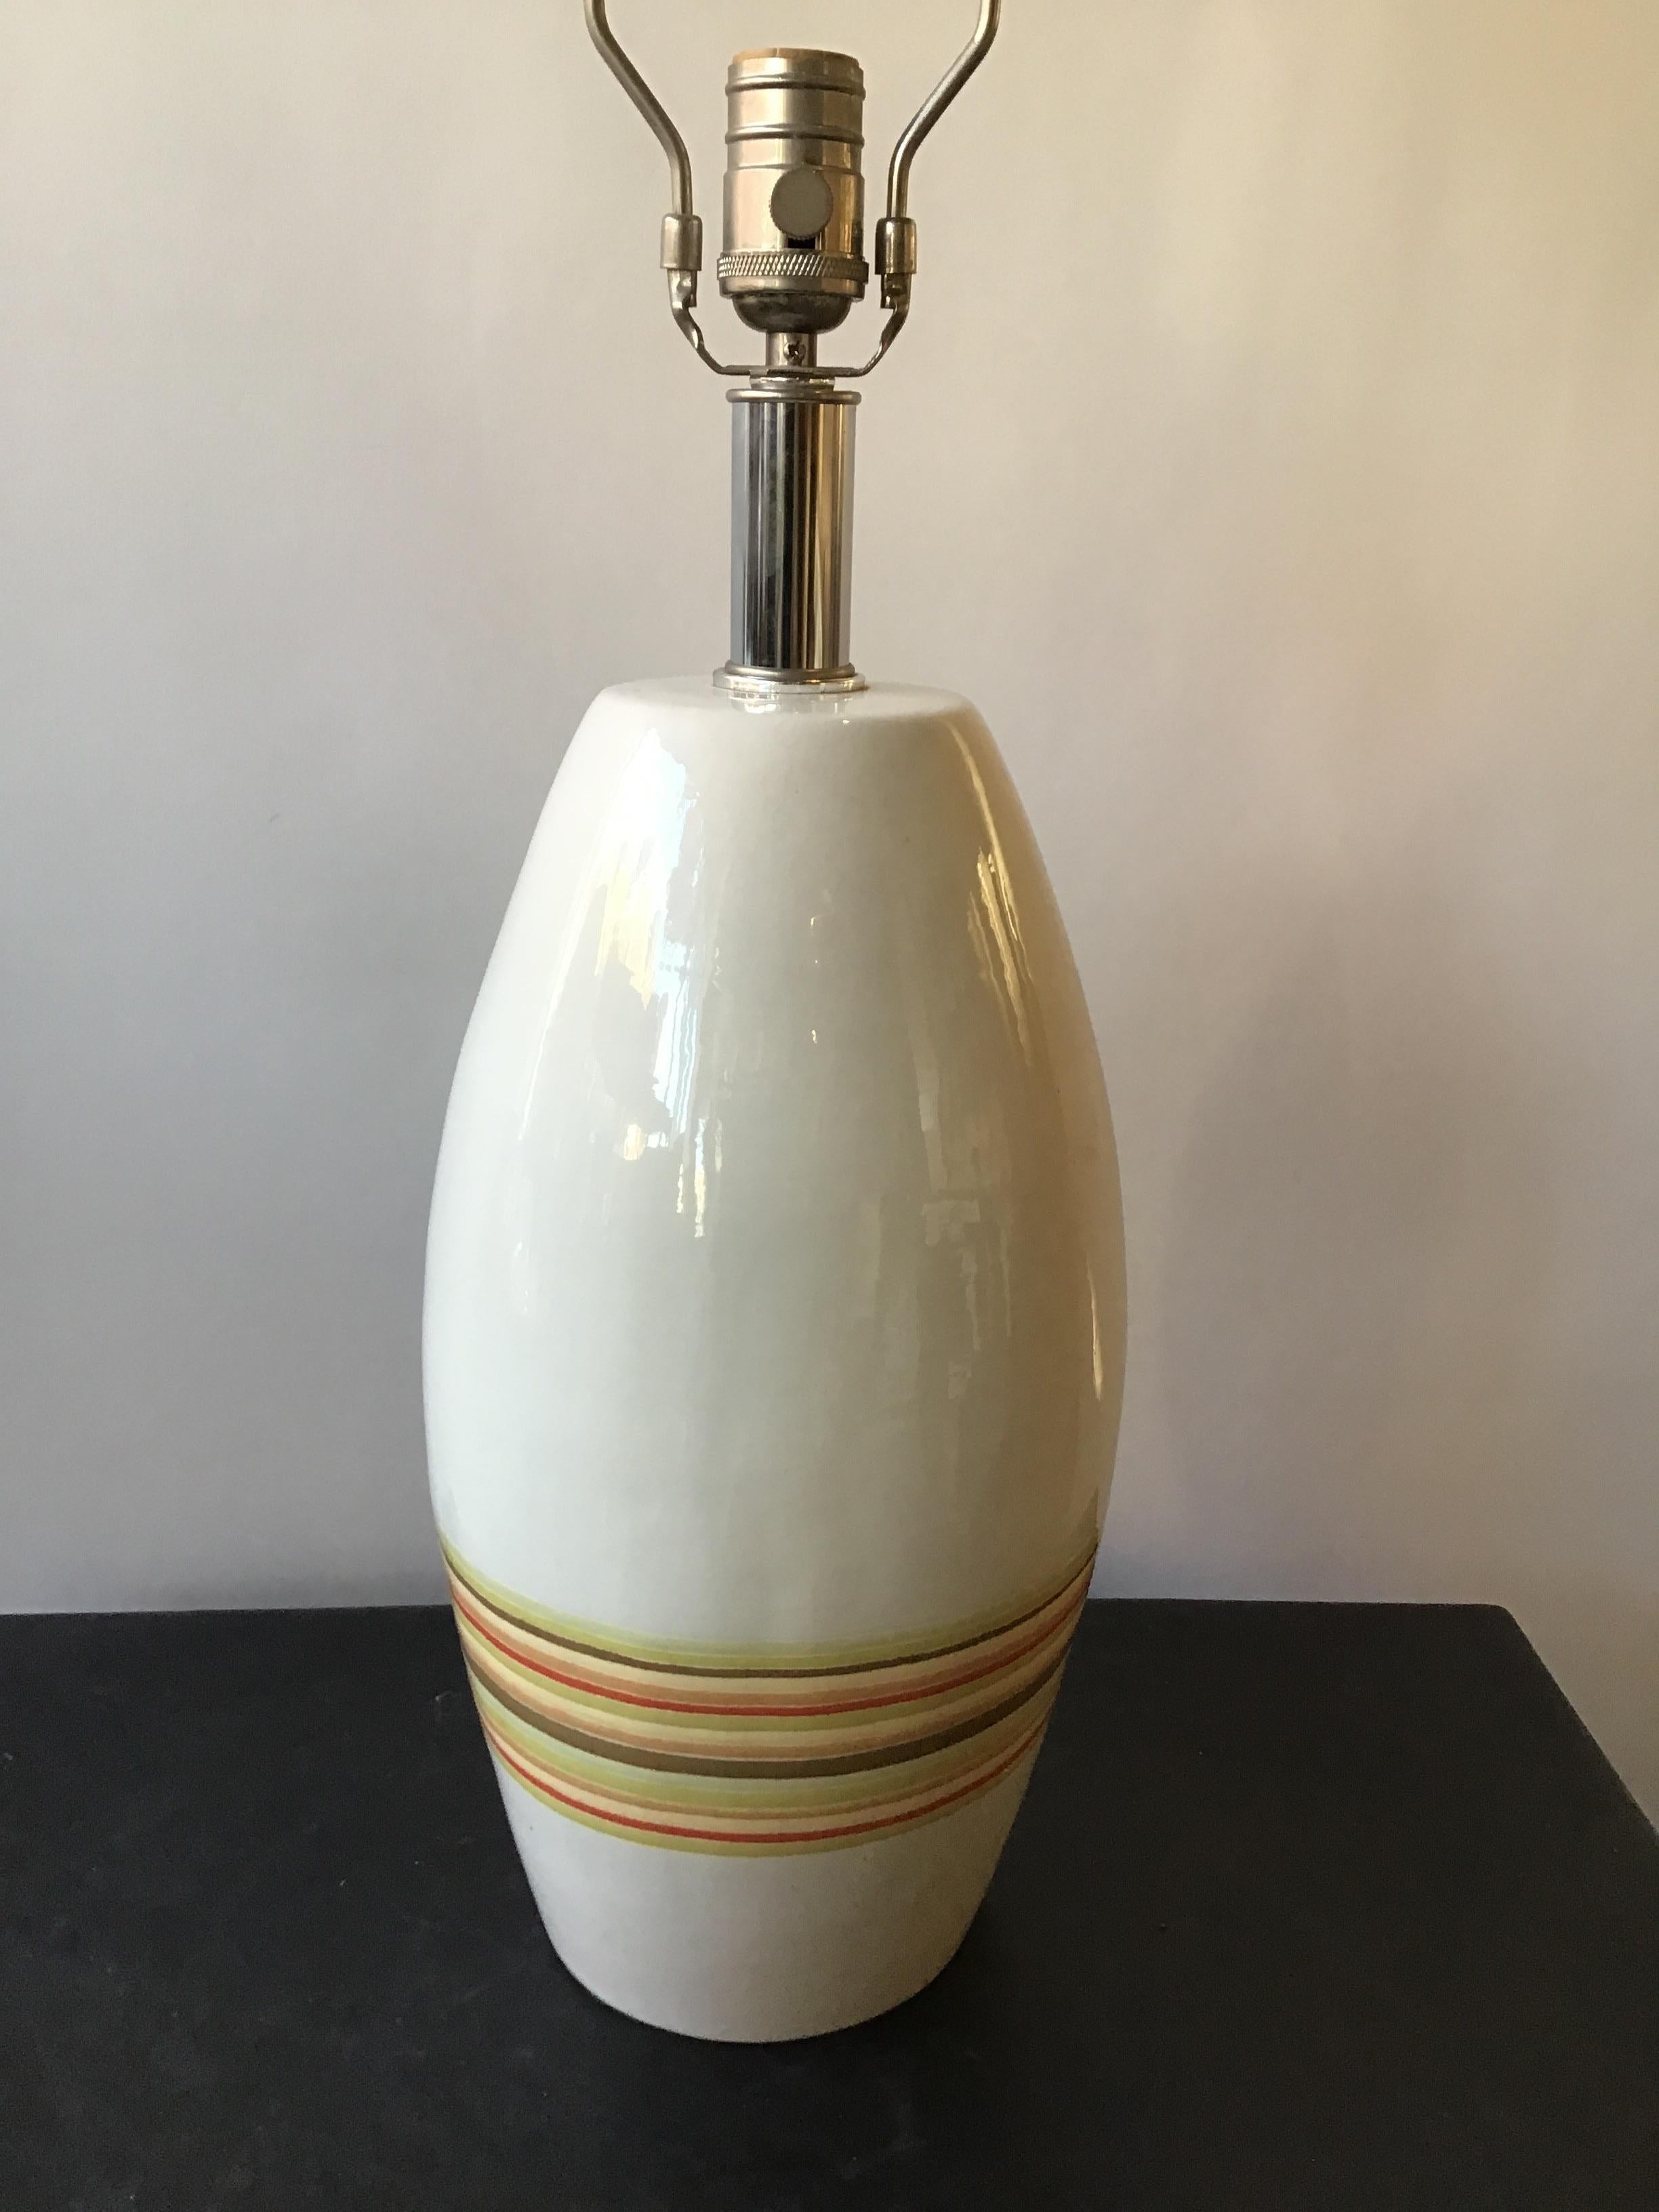 Jill Rosenwald handmade in Boston, ceramic striped lamp. Hand painted.